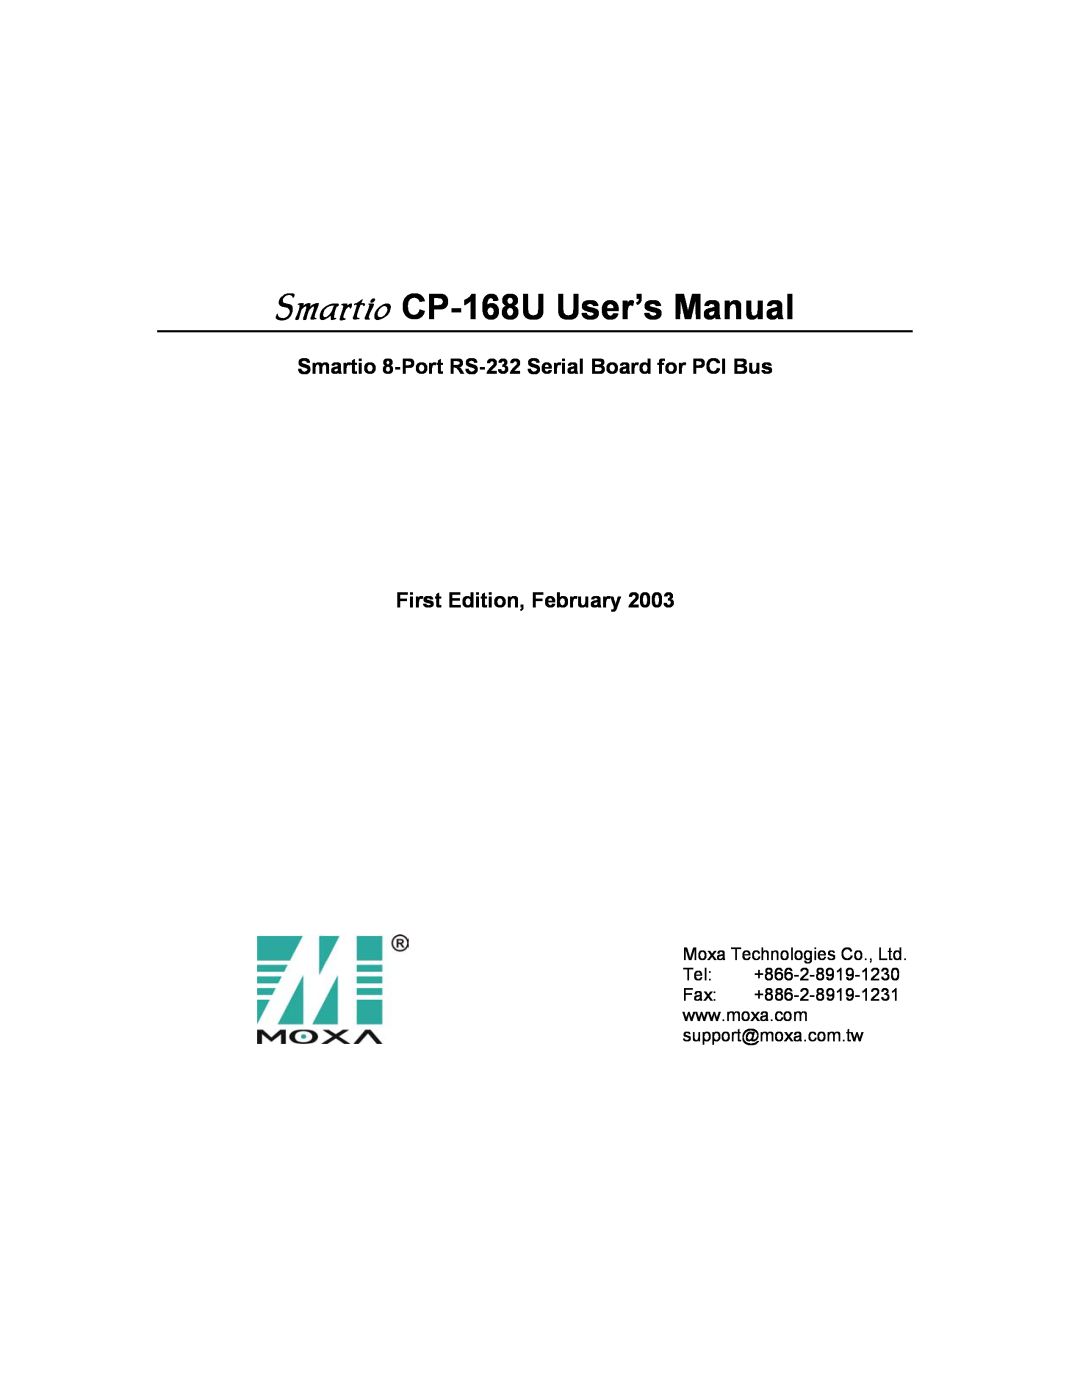 Moxa Technologies user manual Smartio CP-168U User’s Manual, Smartio 8-Port RS-232 Serial Board for Universal PCI Bus 